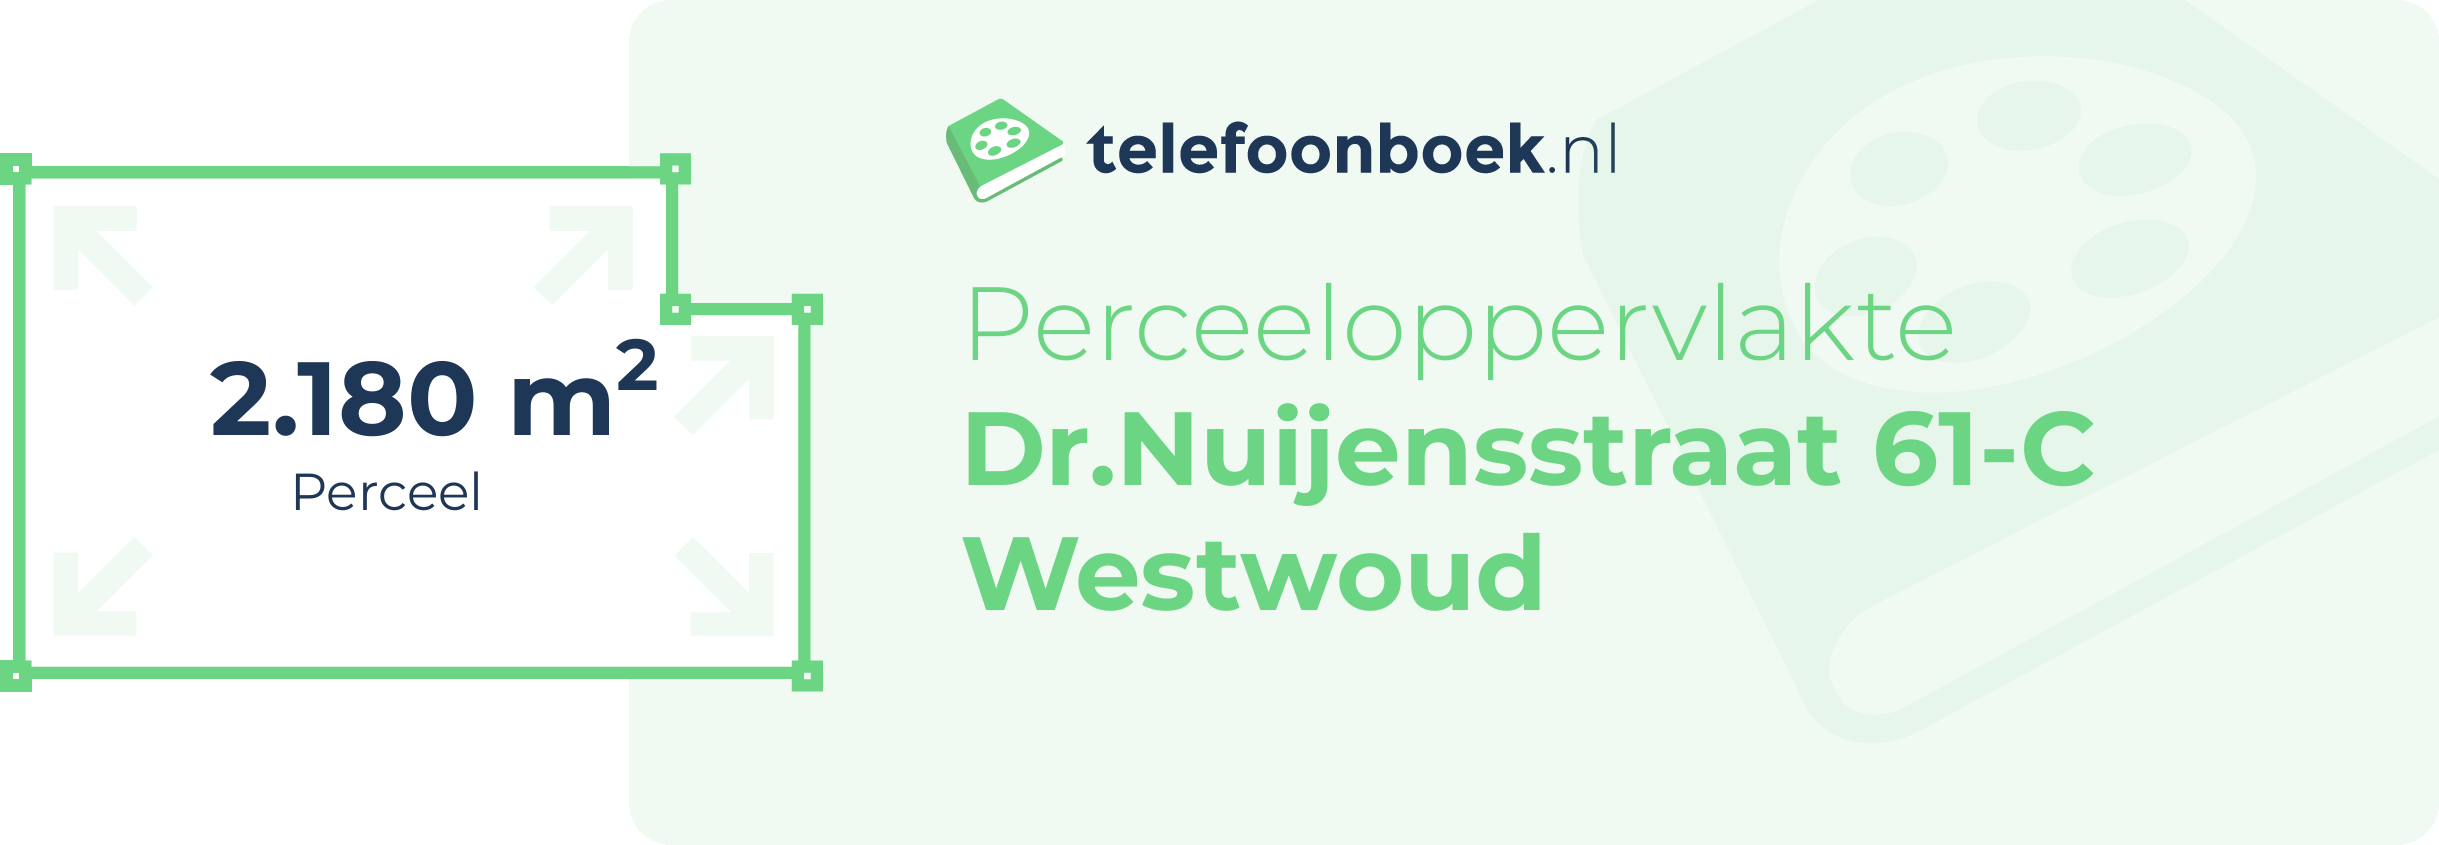 Perceeloppervlakte Dr.Nuijensstraat 61-C Westwoud